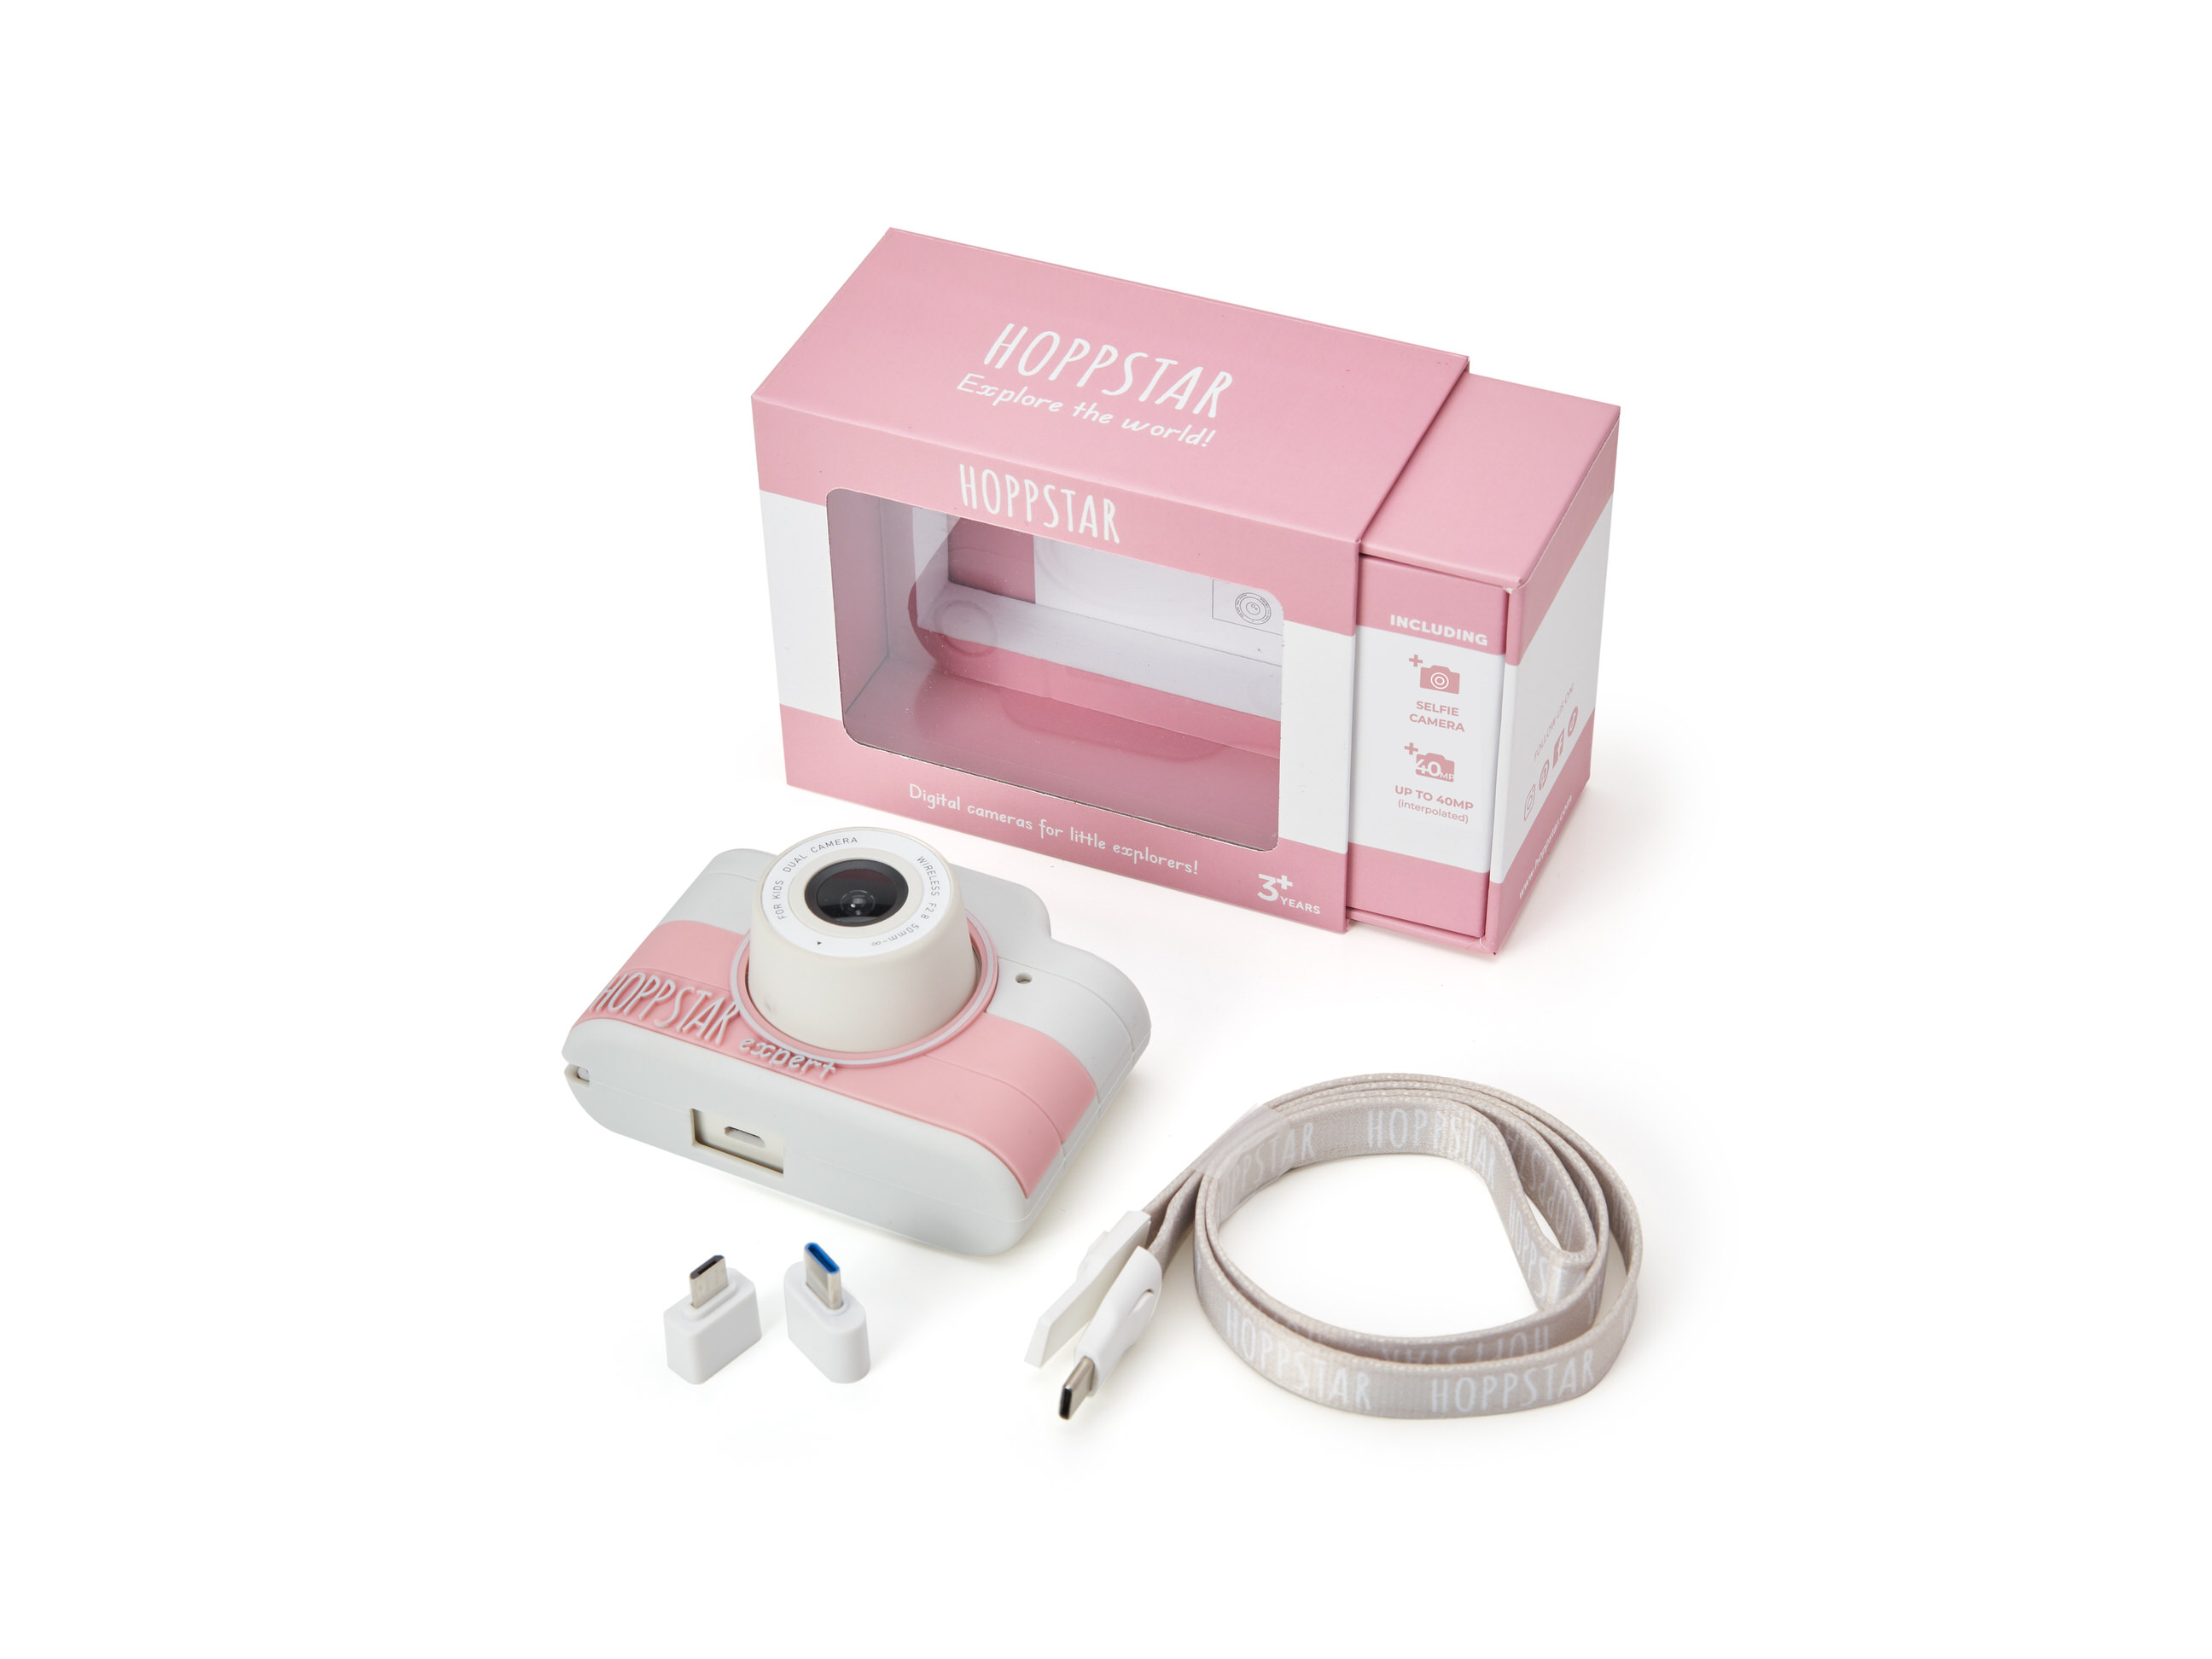 Hoppstar Expert Kamera mit Blush (rosa/weiß) Silikonhülle, kompletter Lieferumfang